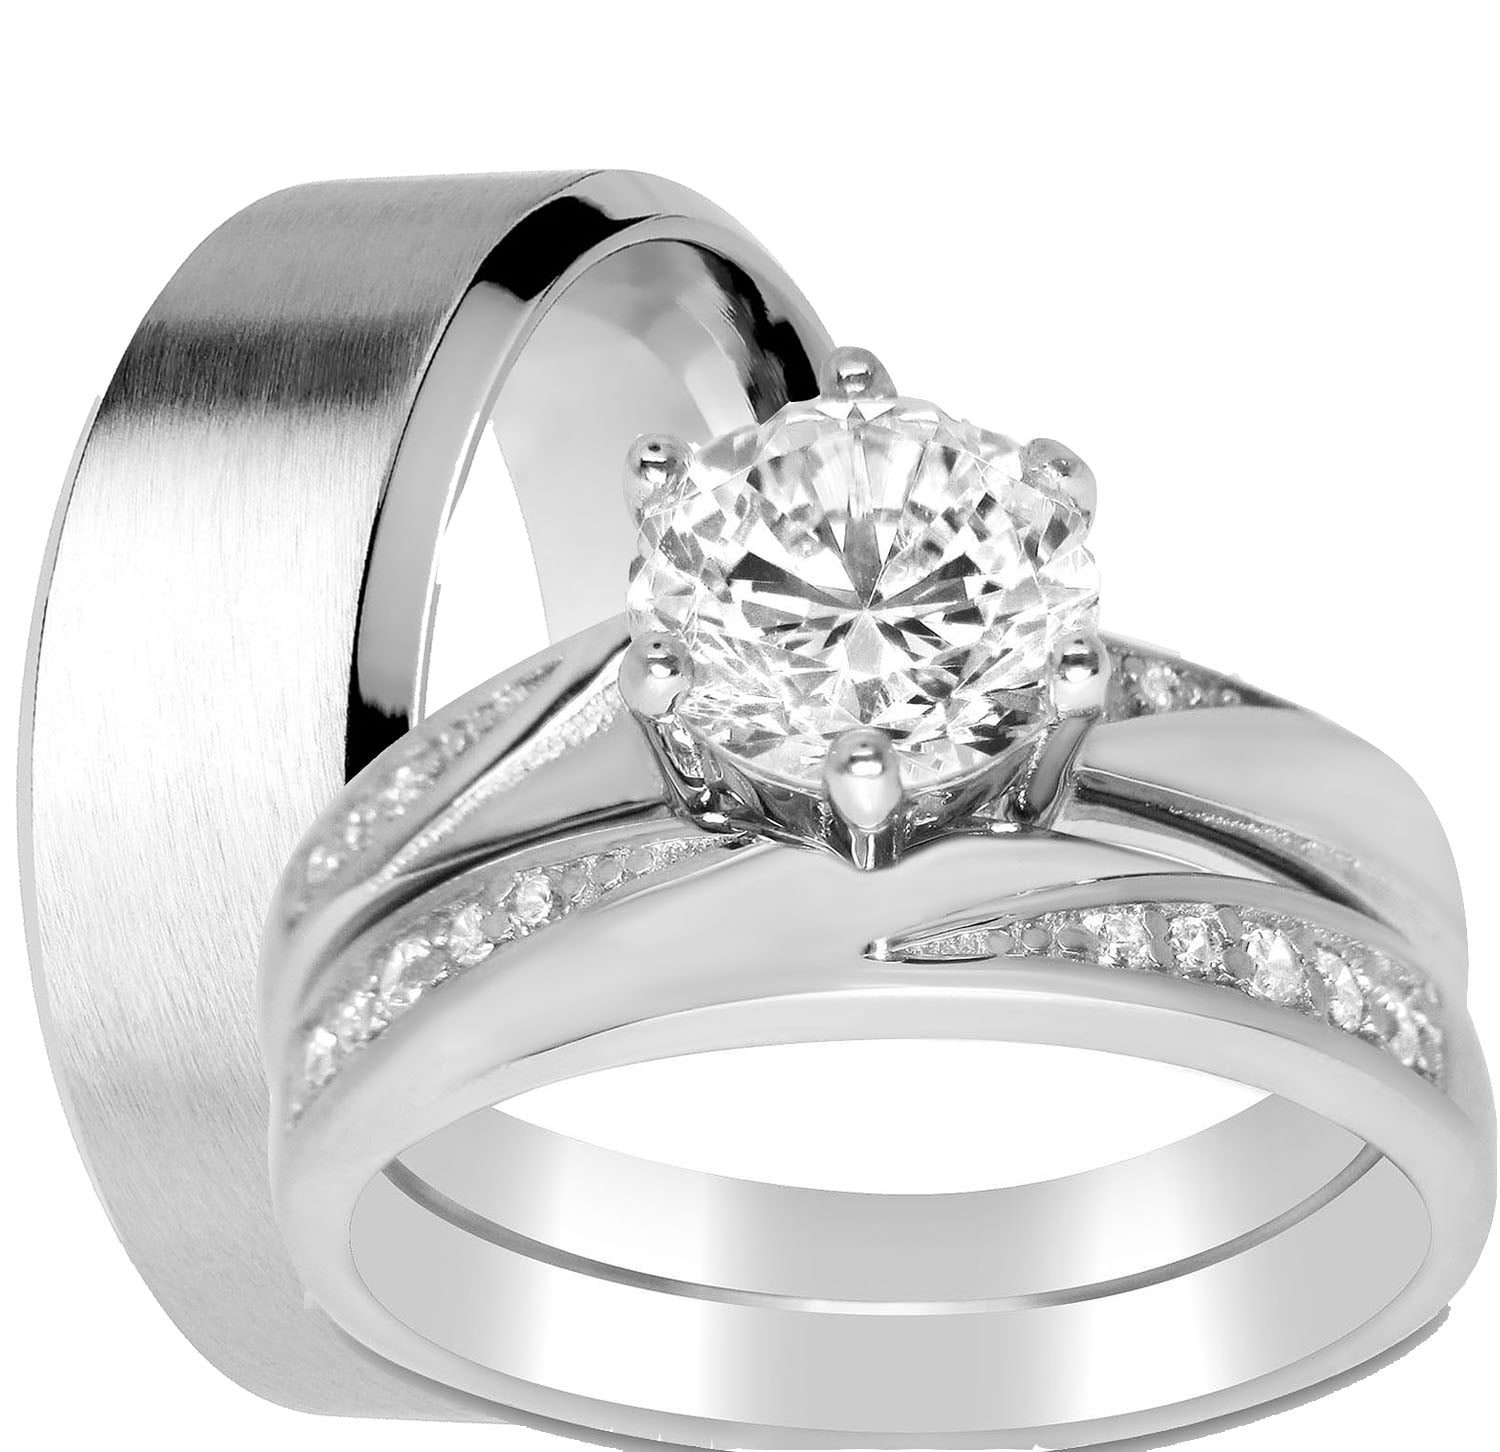 Sz 9 His & Her Matching Engagement Wedding Ring Set 